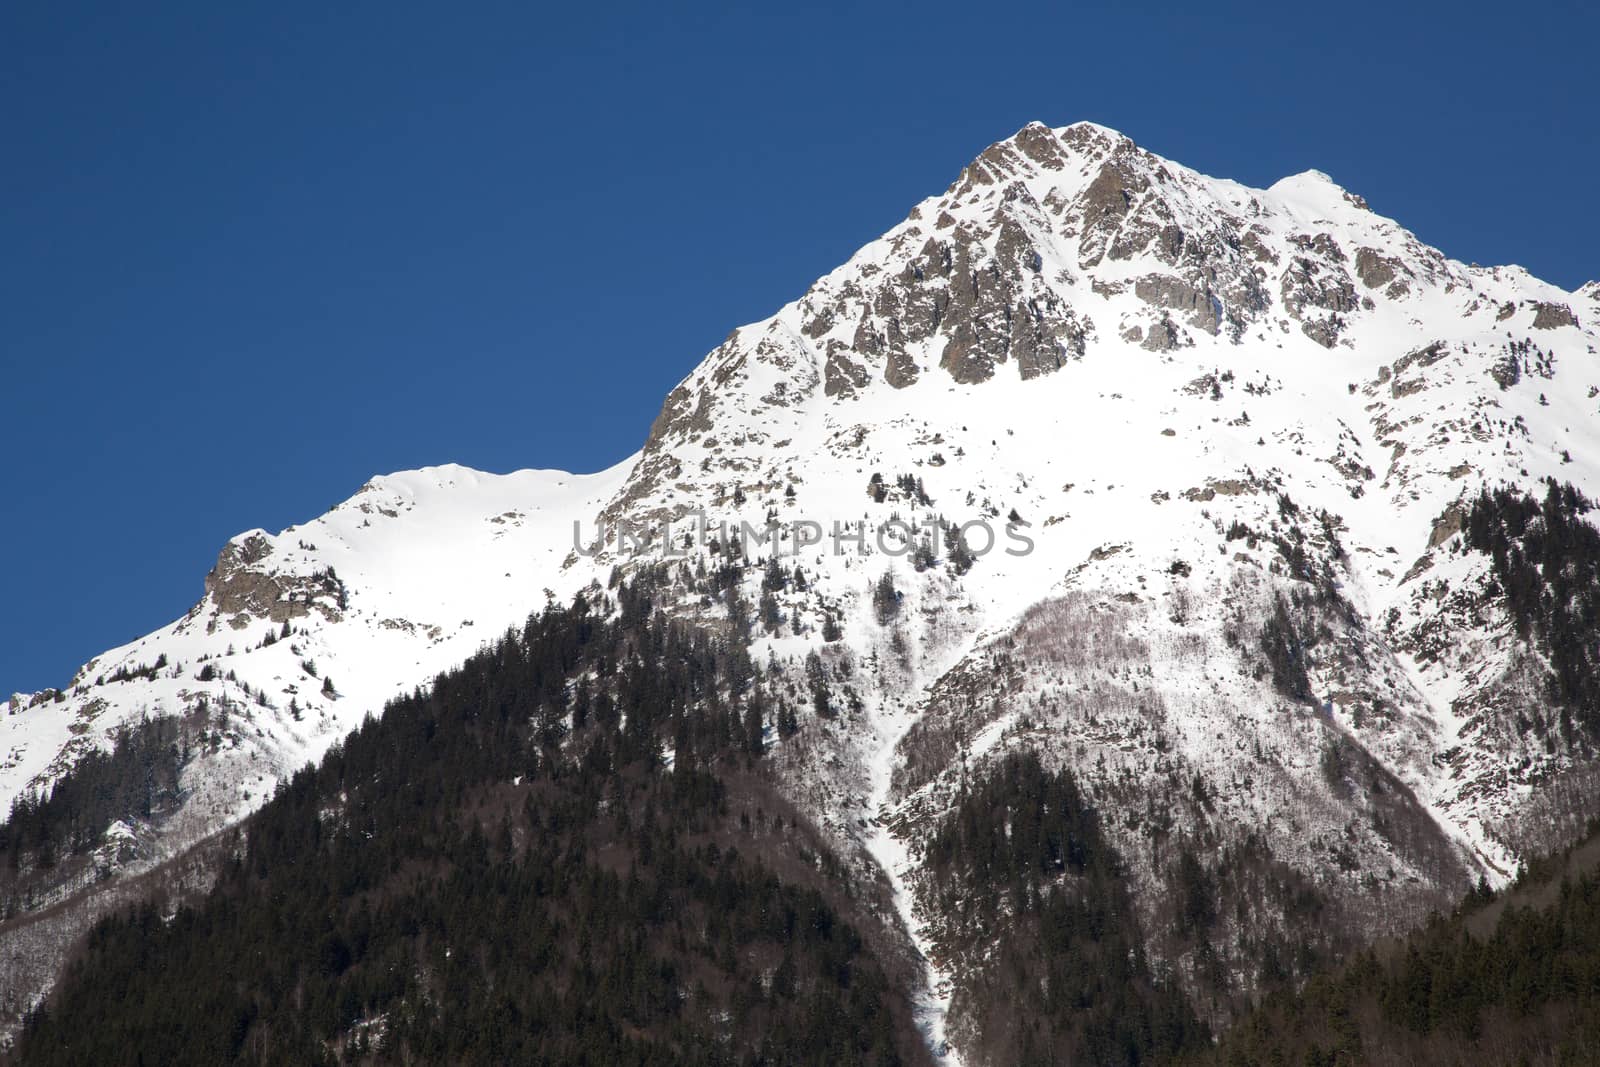 Alps in winter - 17 by Kartouchken